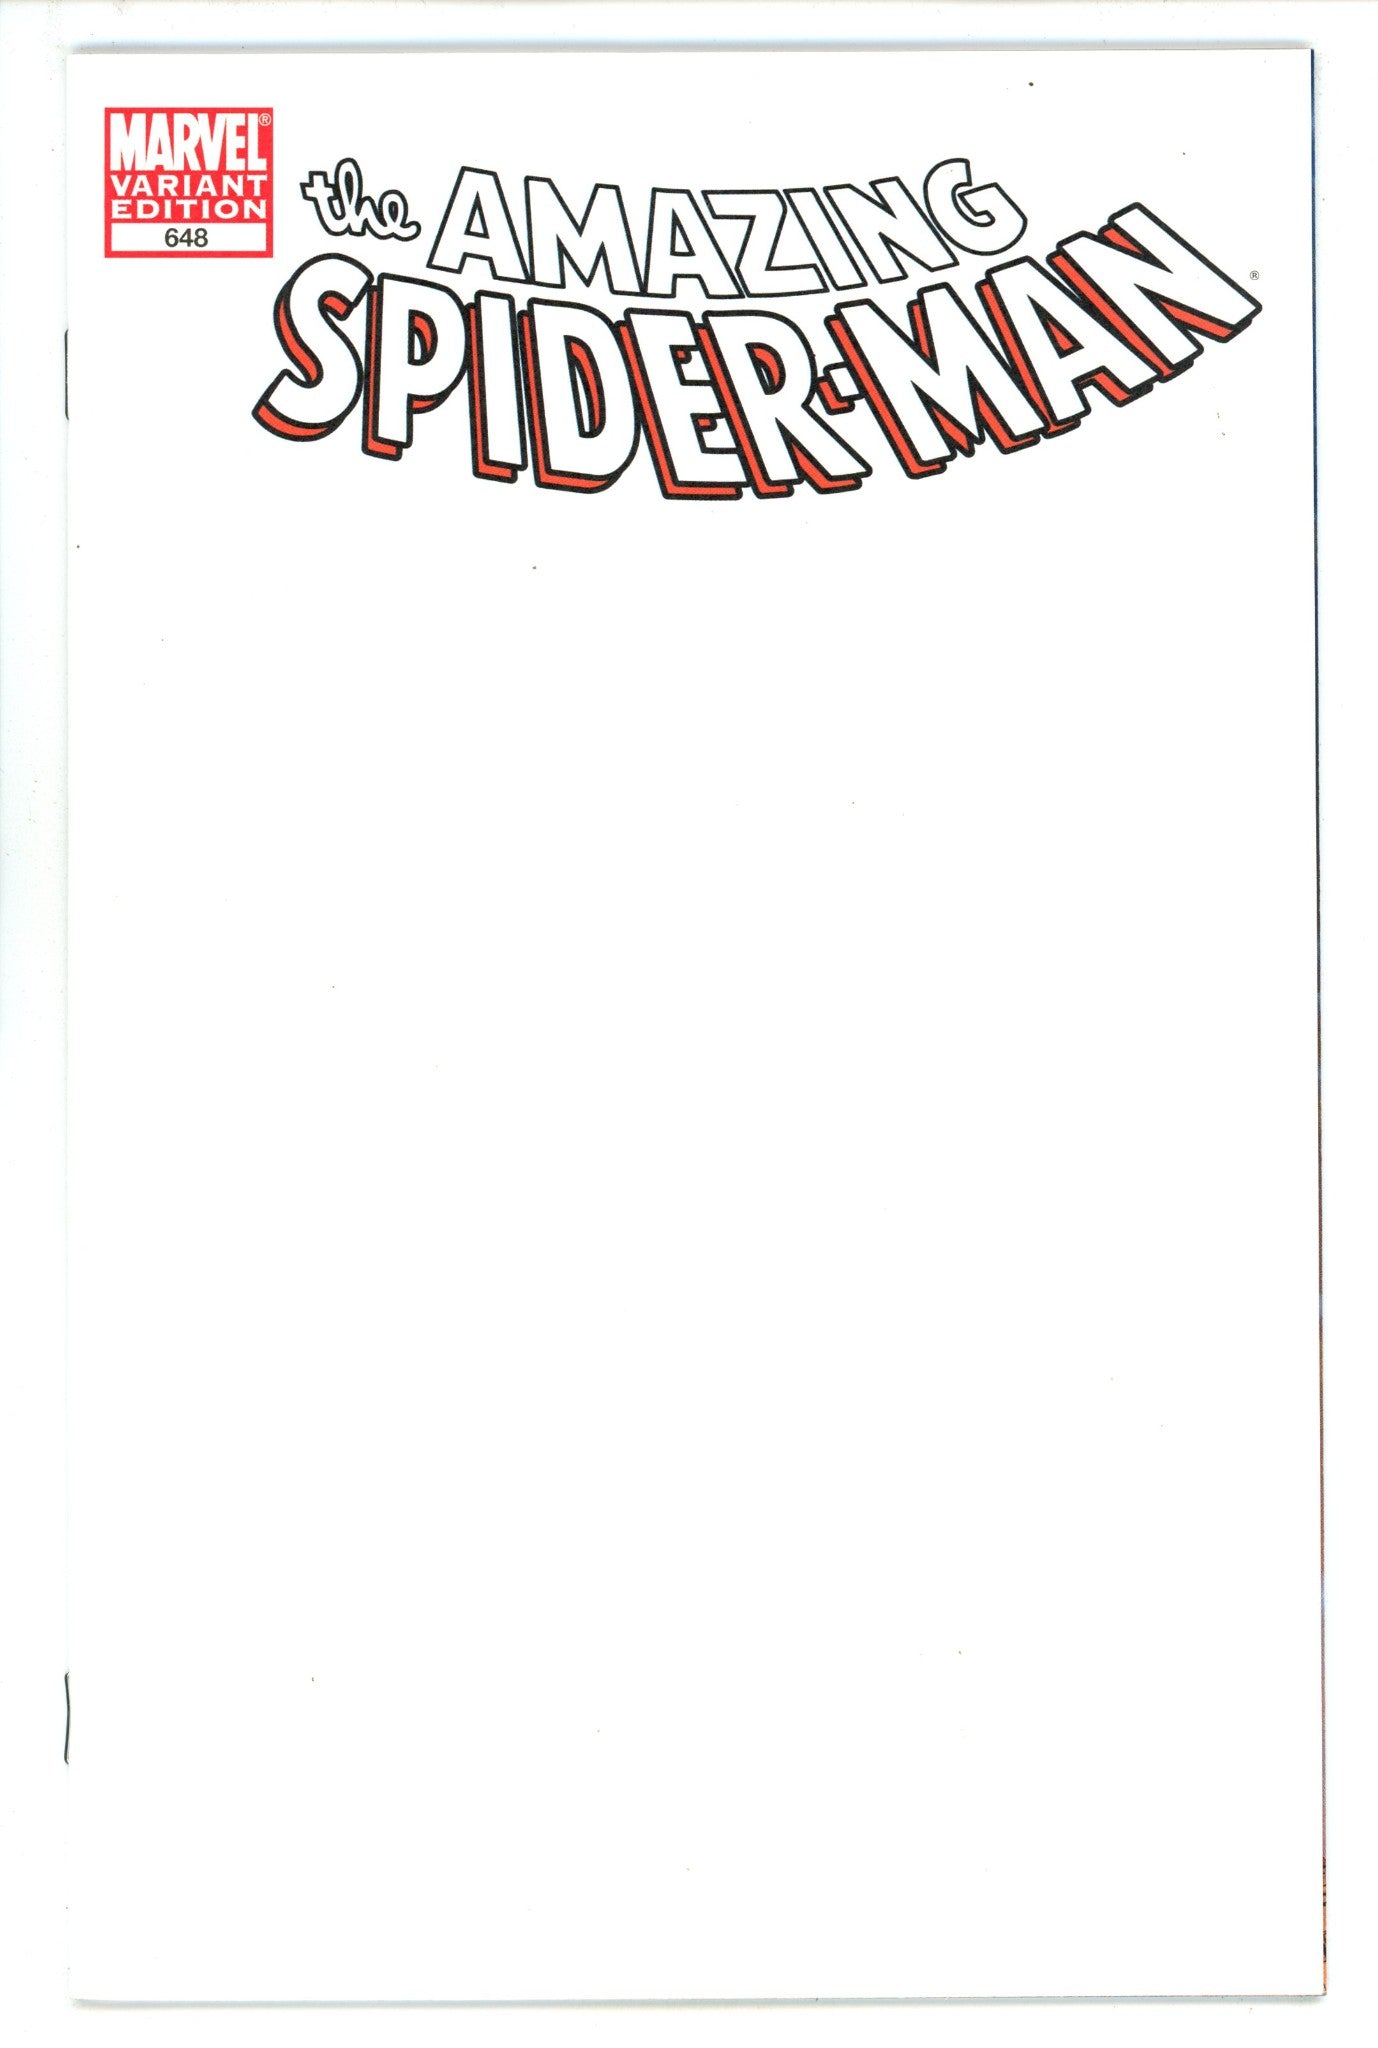 The Amazing Spider-Man Vol 2 648 VF (8.0) (2011) Blank Variant 